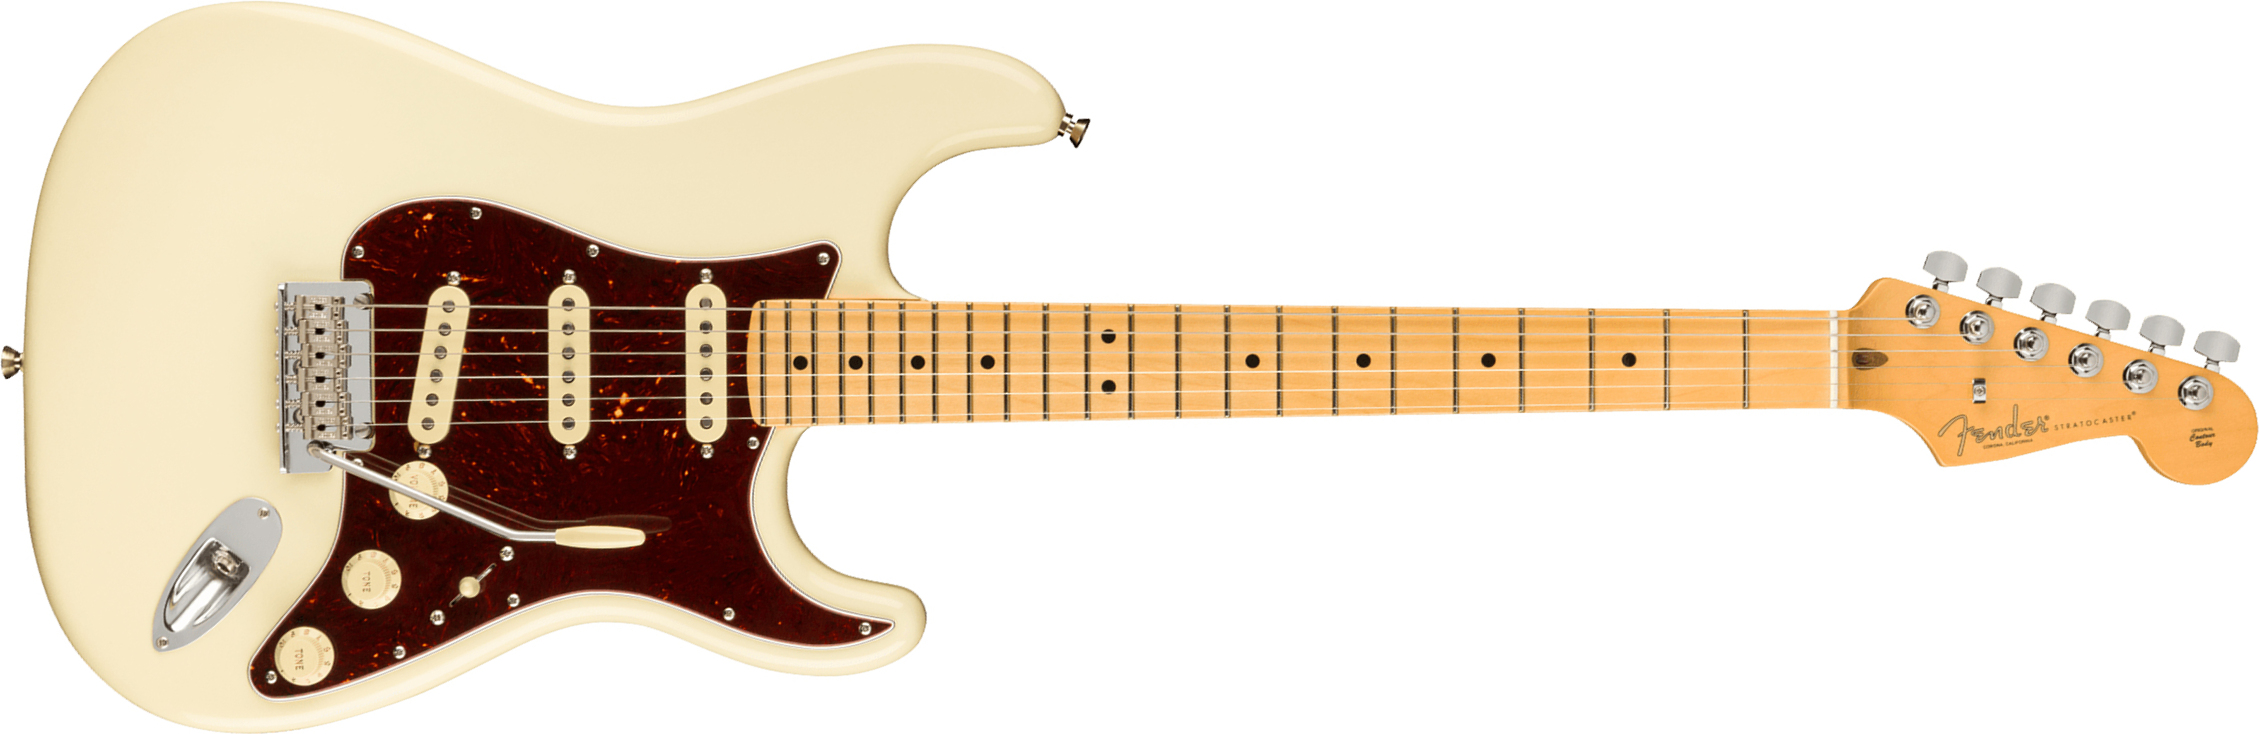 Fender Strat American Professional Ii Usa Mn - Olympic White - Elektrische gitaar in Str-vorm - Main picture